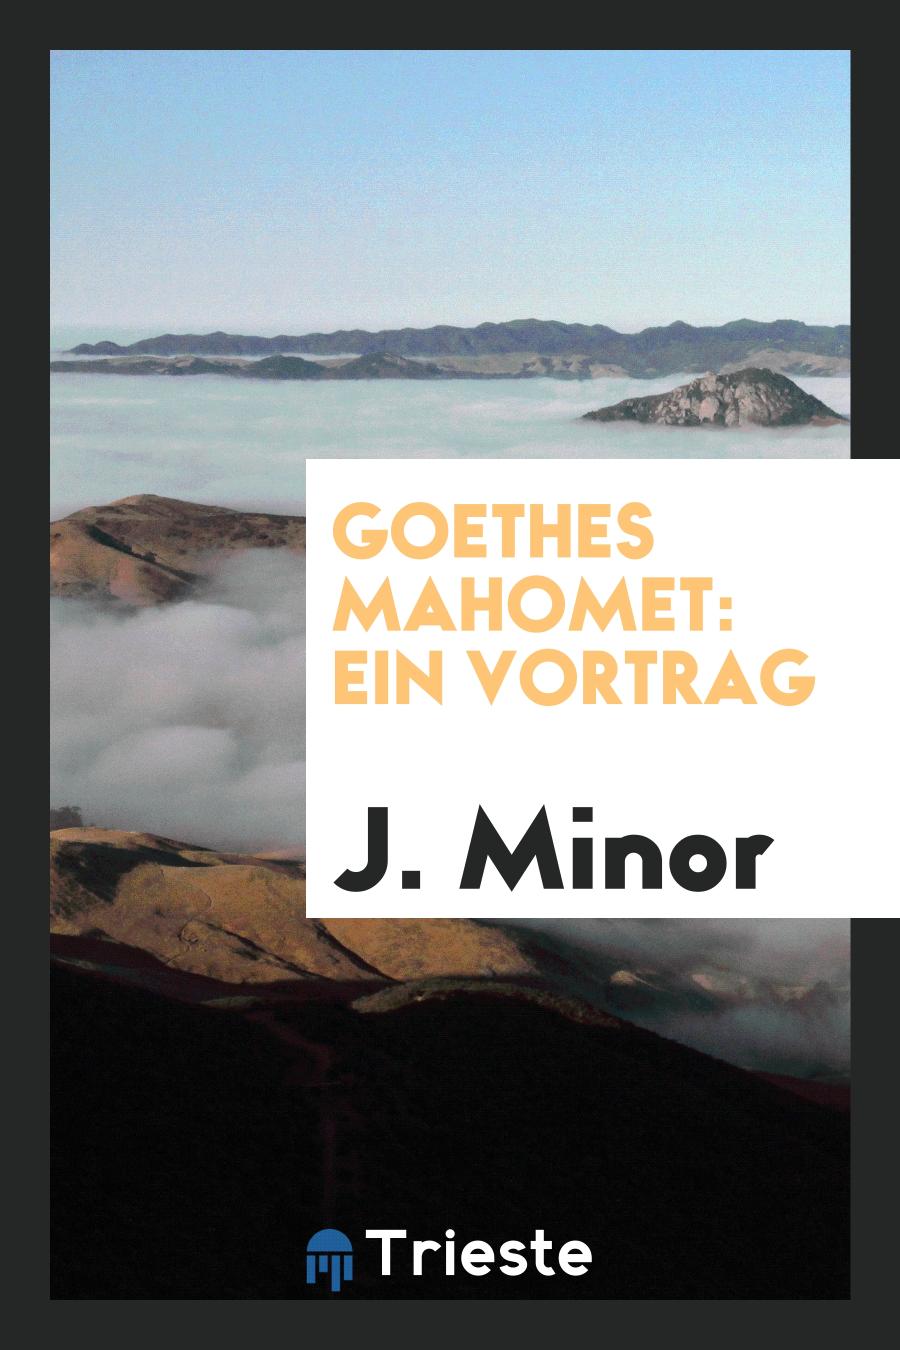 J. Minor - Goethes Mahomet: Ein Vortrag